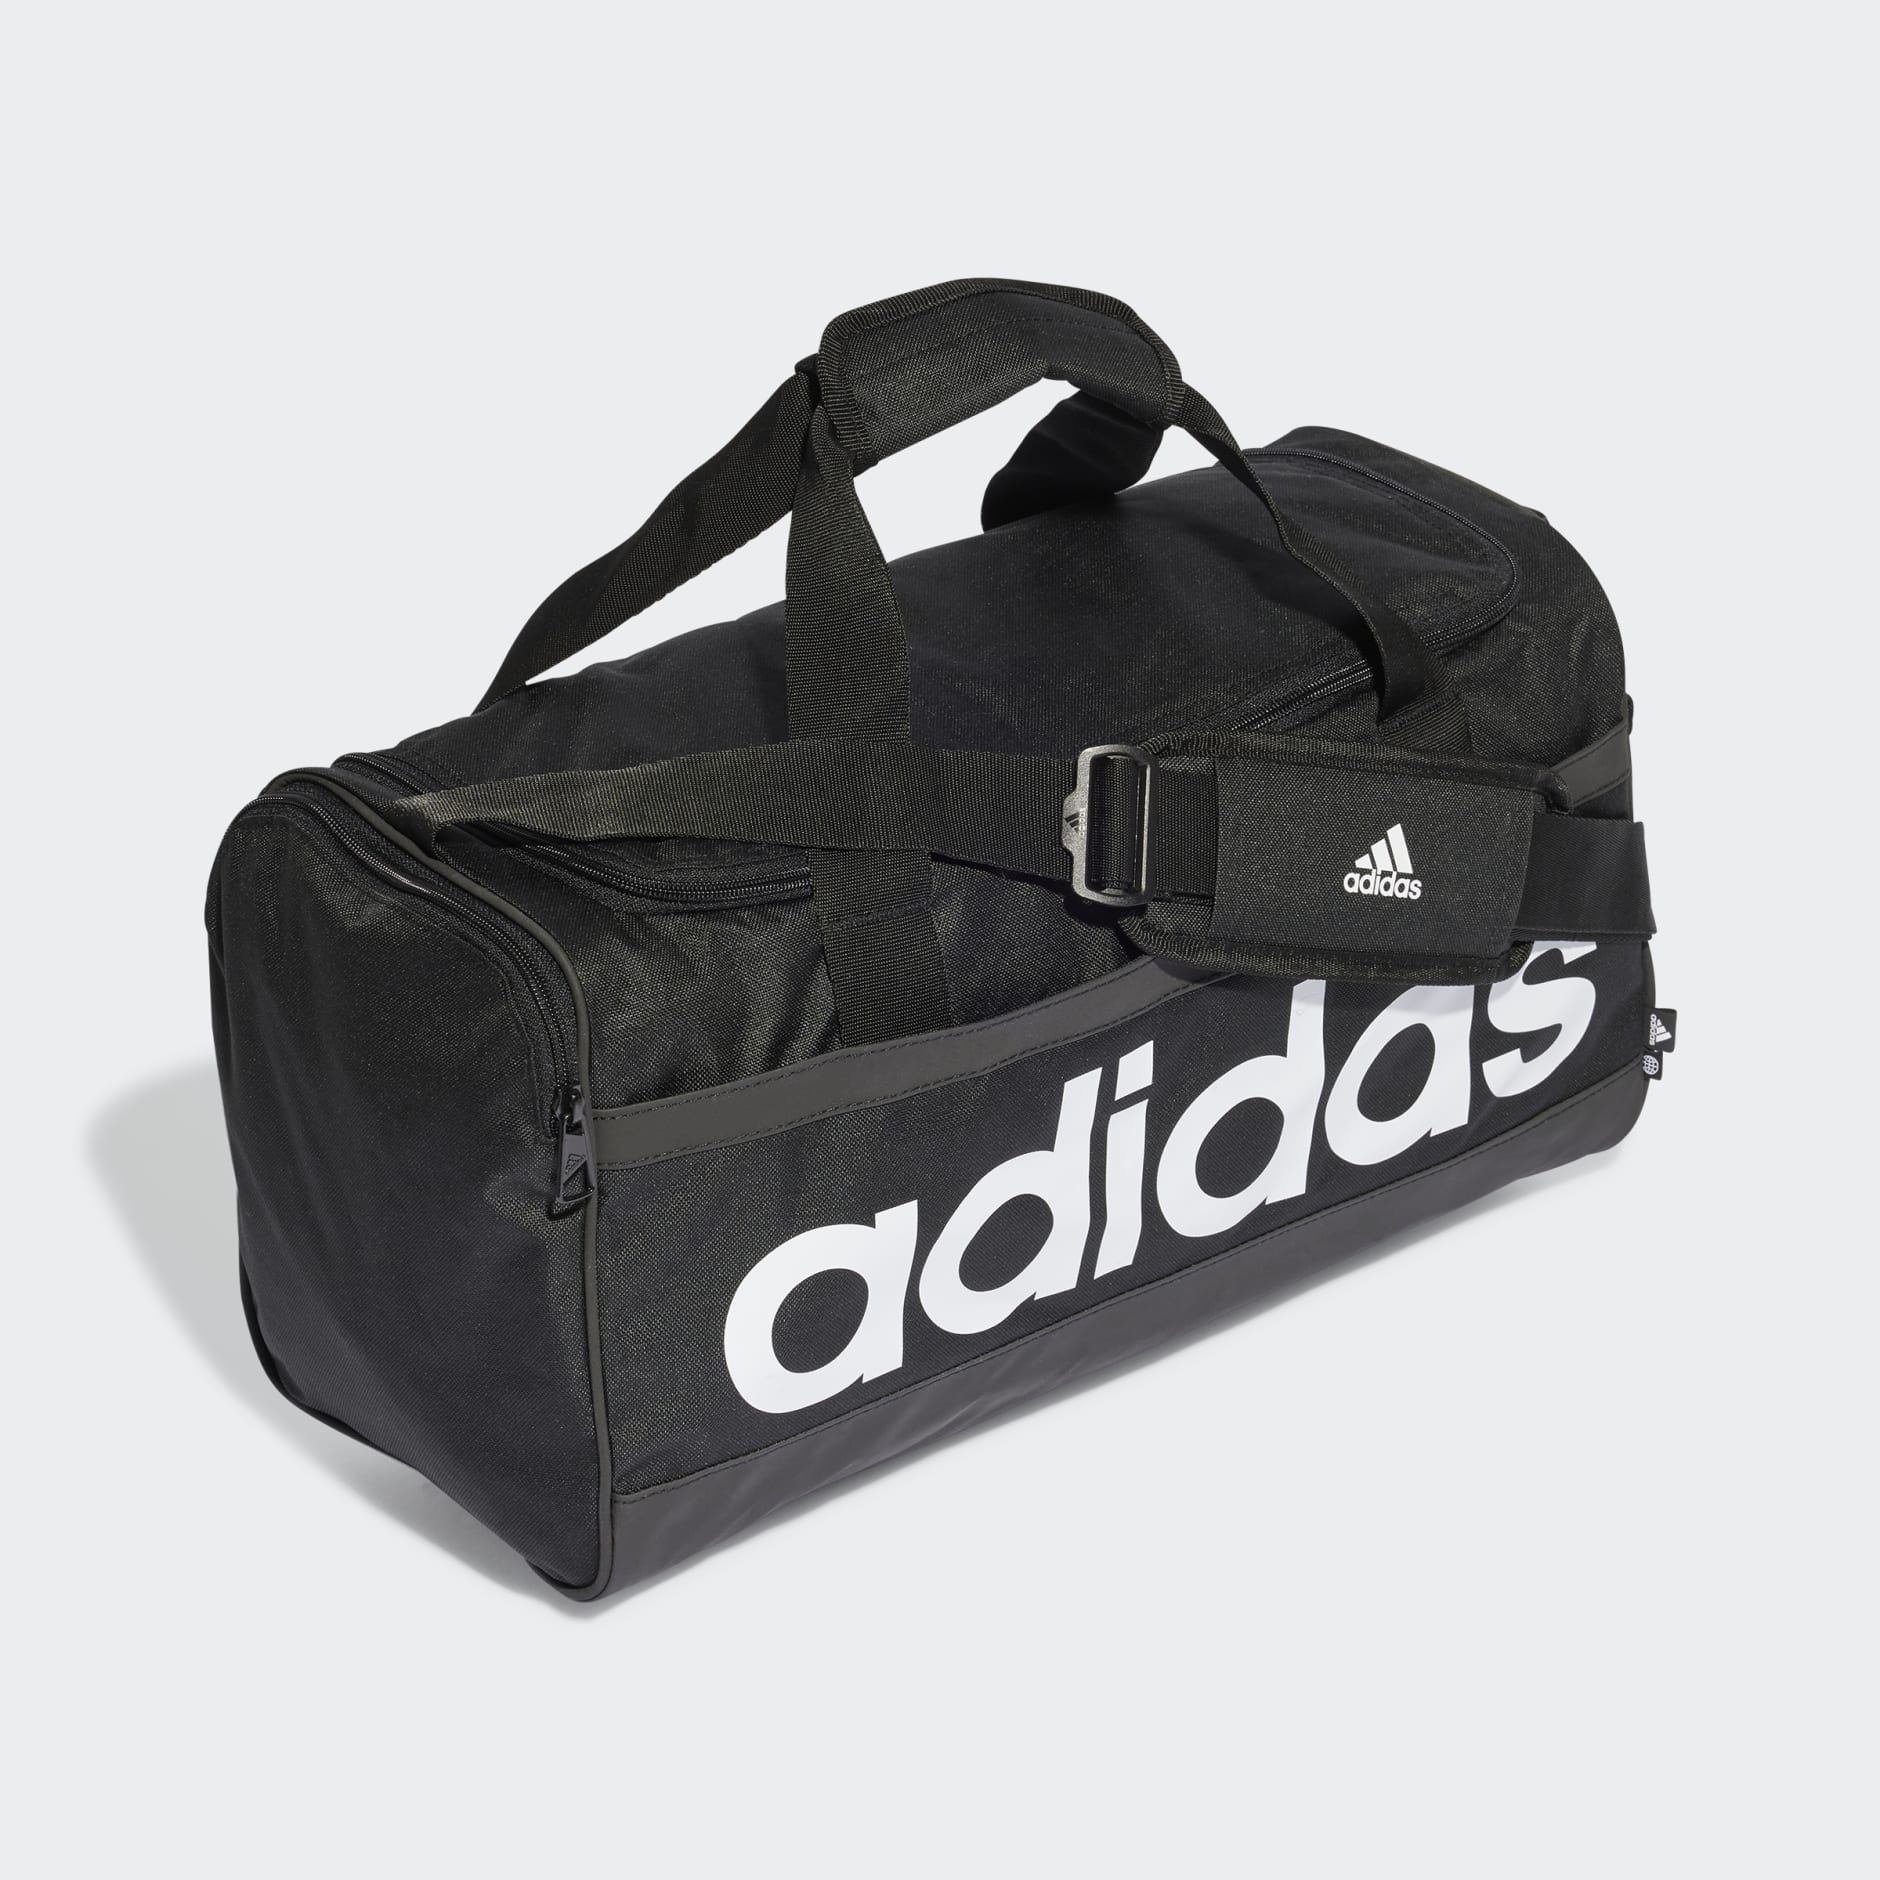 Accessories - Essentials Linear Duffel Bag Medium - Black | adidas ...